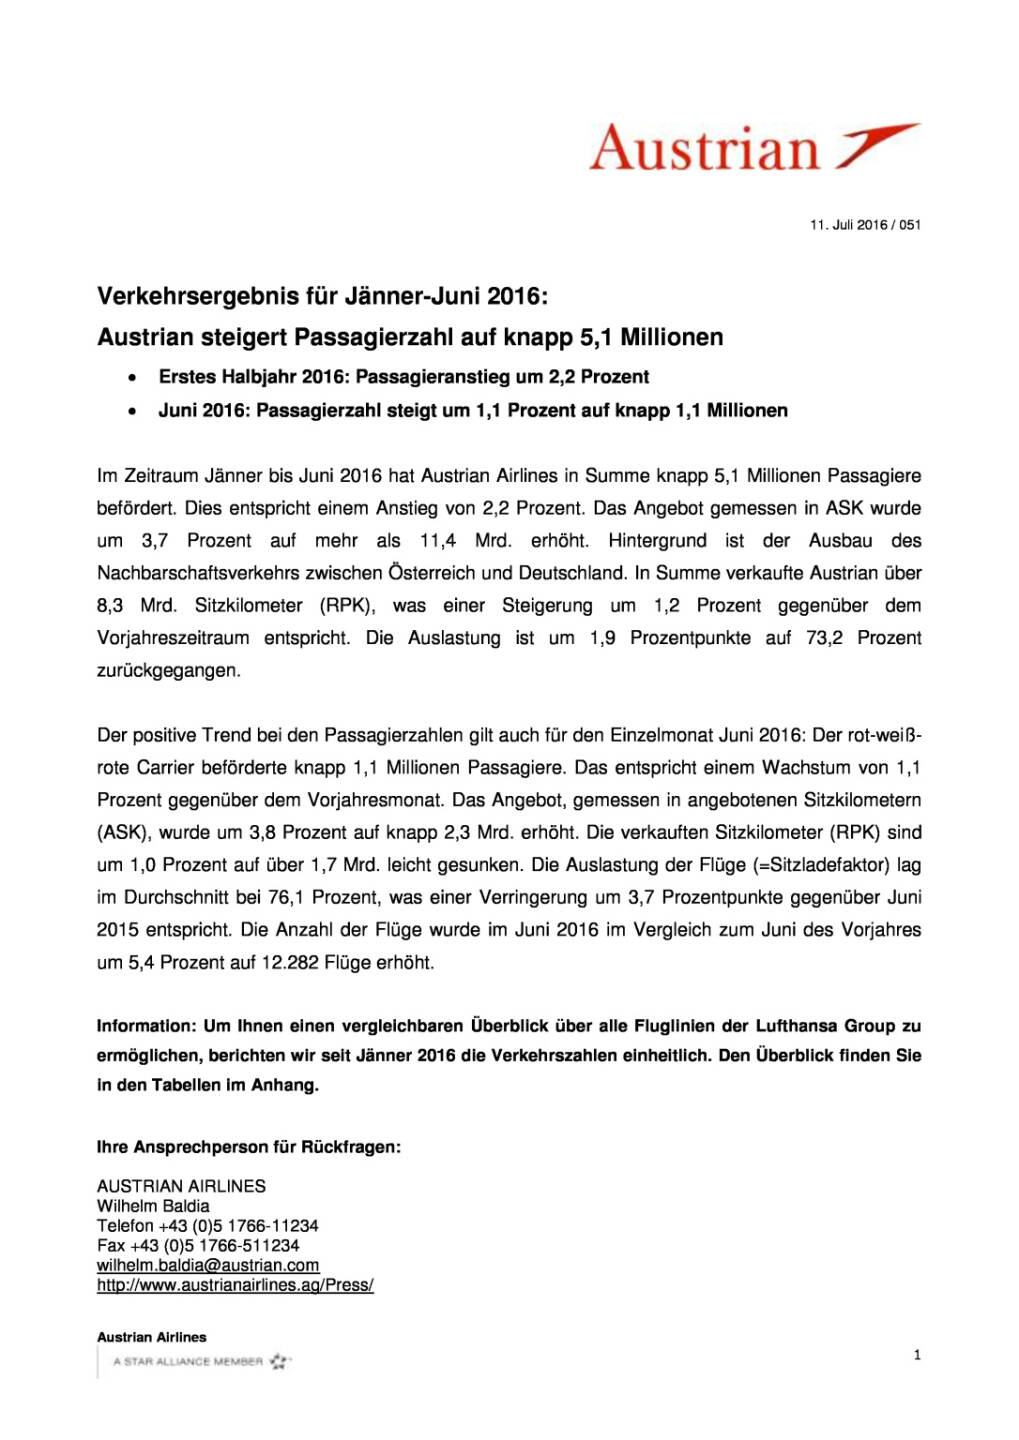 Austrian Airlines: Verkehrsergebnis Jänner-Juni 2016, Seite 1/3, komplettes Dokument unter http://boerse-social.com/static/uploads/file_1378_austrian_airlines_verkehrsergebnis_janner-juni_2016.pdf